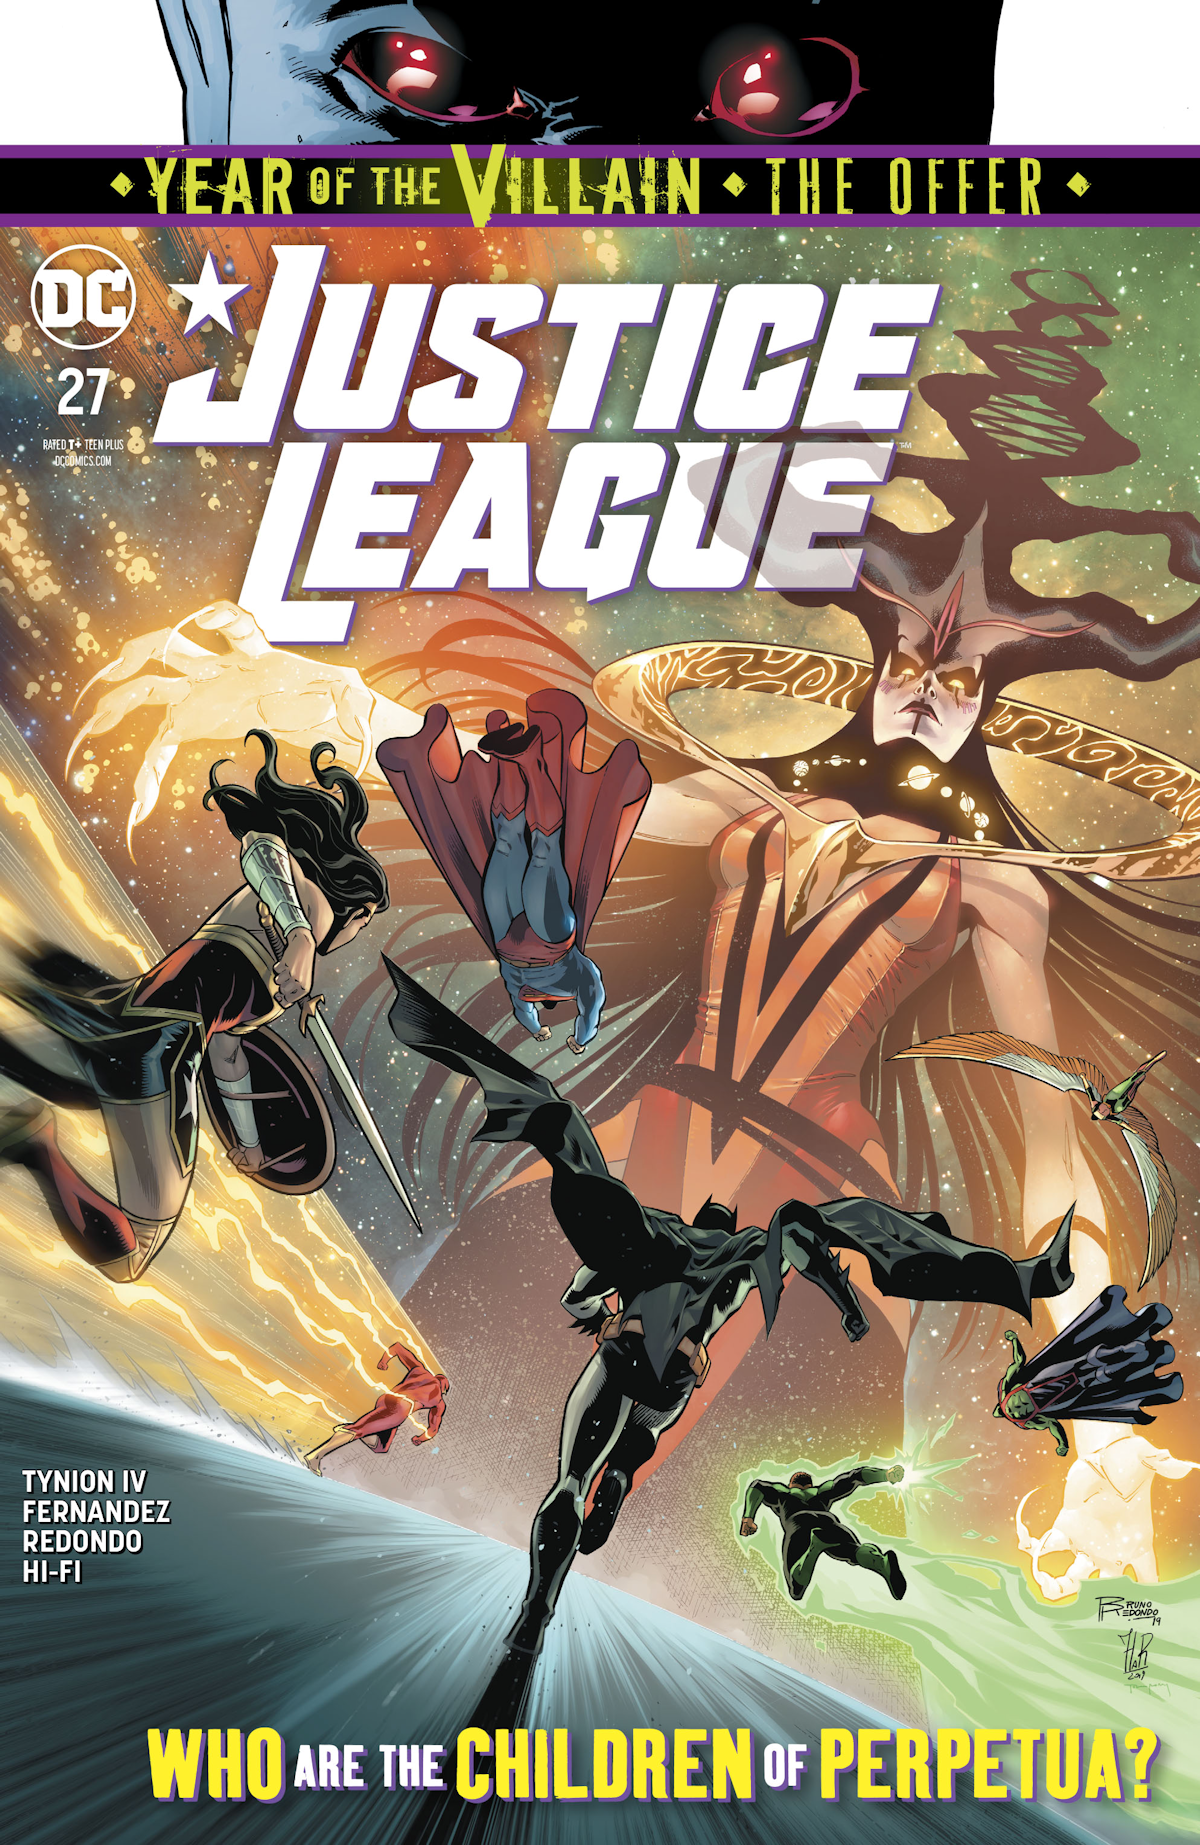 Justice League Vol. 4 27 (Cover A)